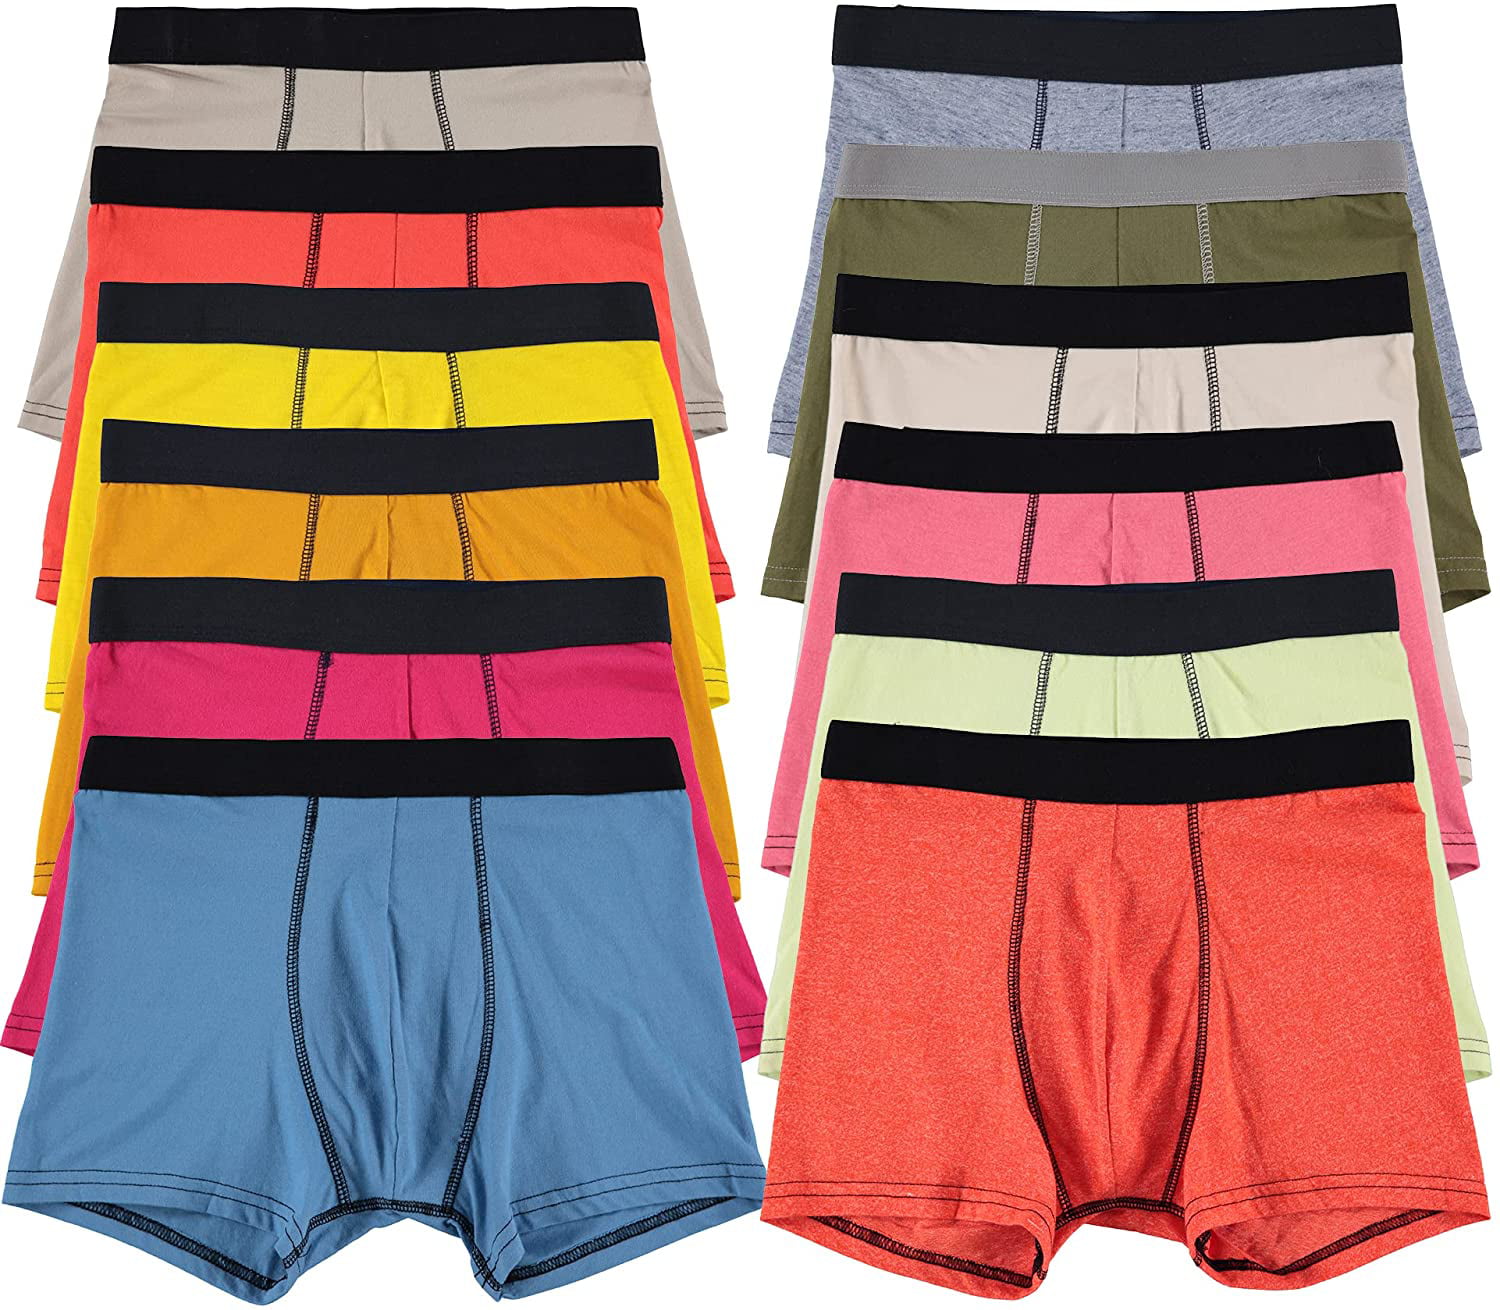 SOCKS'NBULK 12 Pack of Mens Boxer Briefs Underwear Bulk, 100% Cotton, Soft,  Comfortable, Assorted Colorful Brief